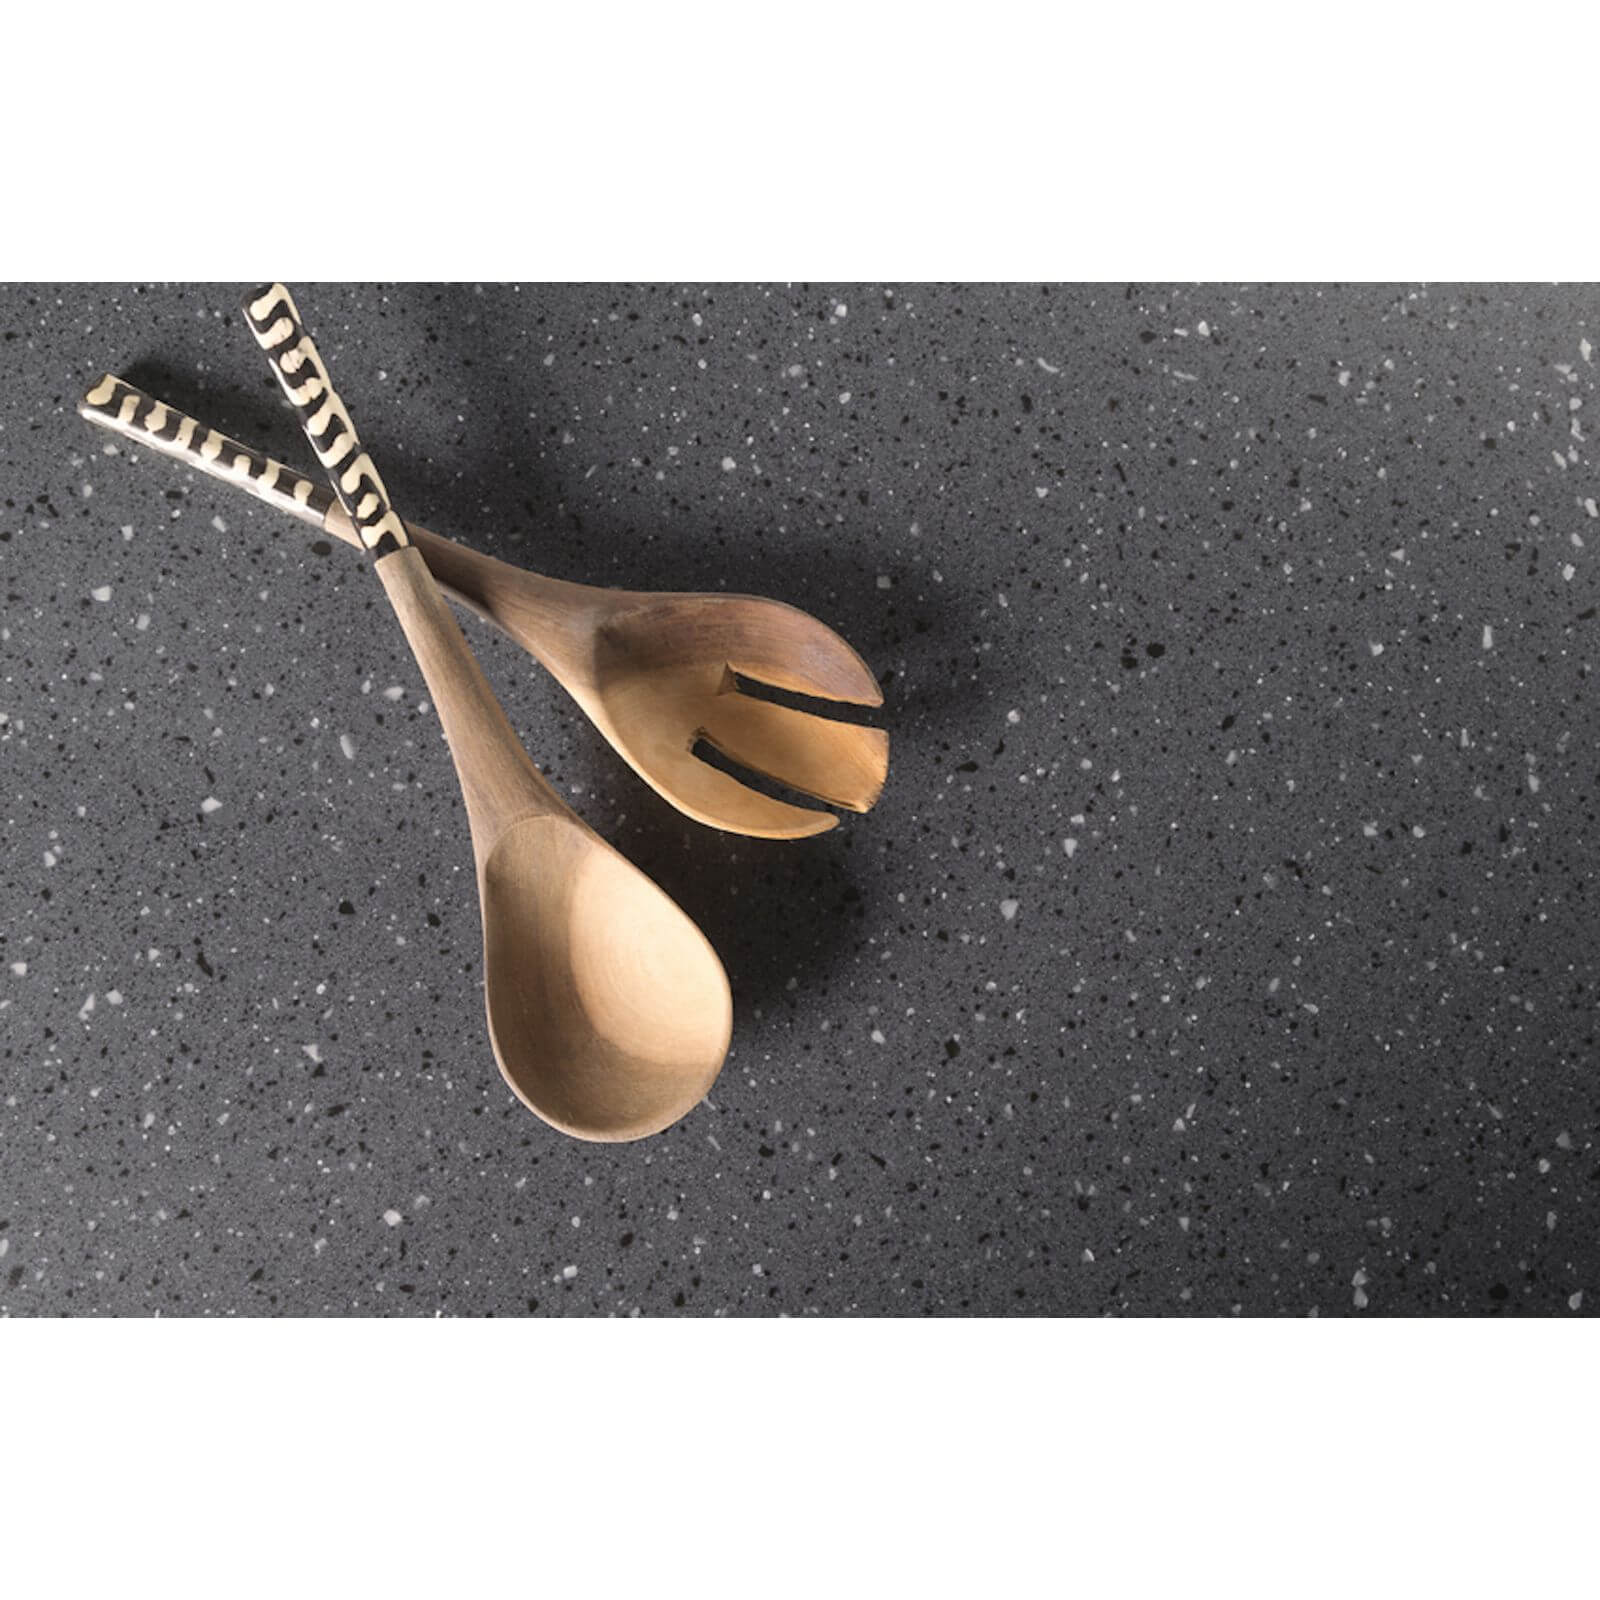 Maia Greystone Kitchen Sink Worktop - Acrylic Right Hand Bowl - 3600 x 650 x 28mm